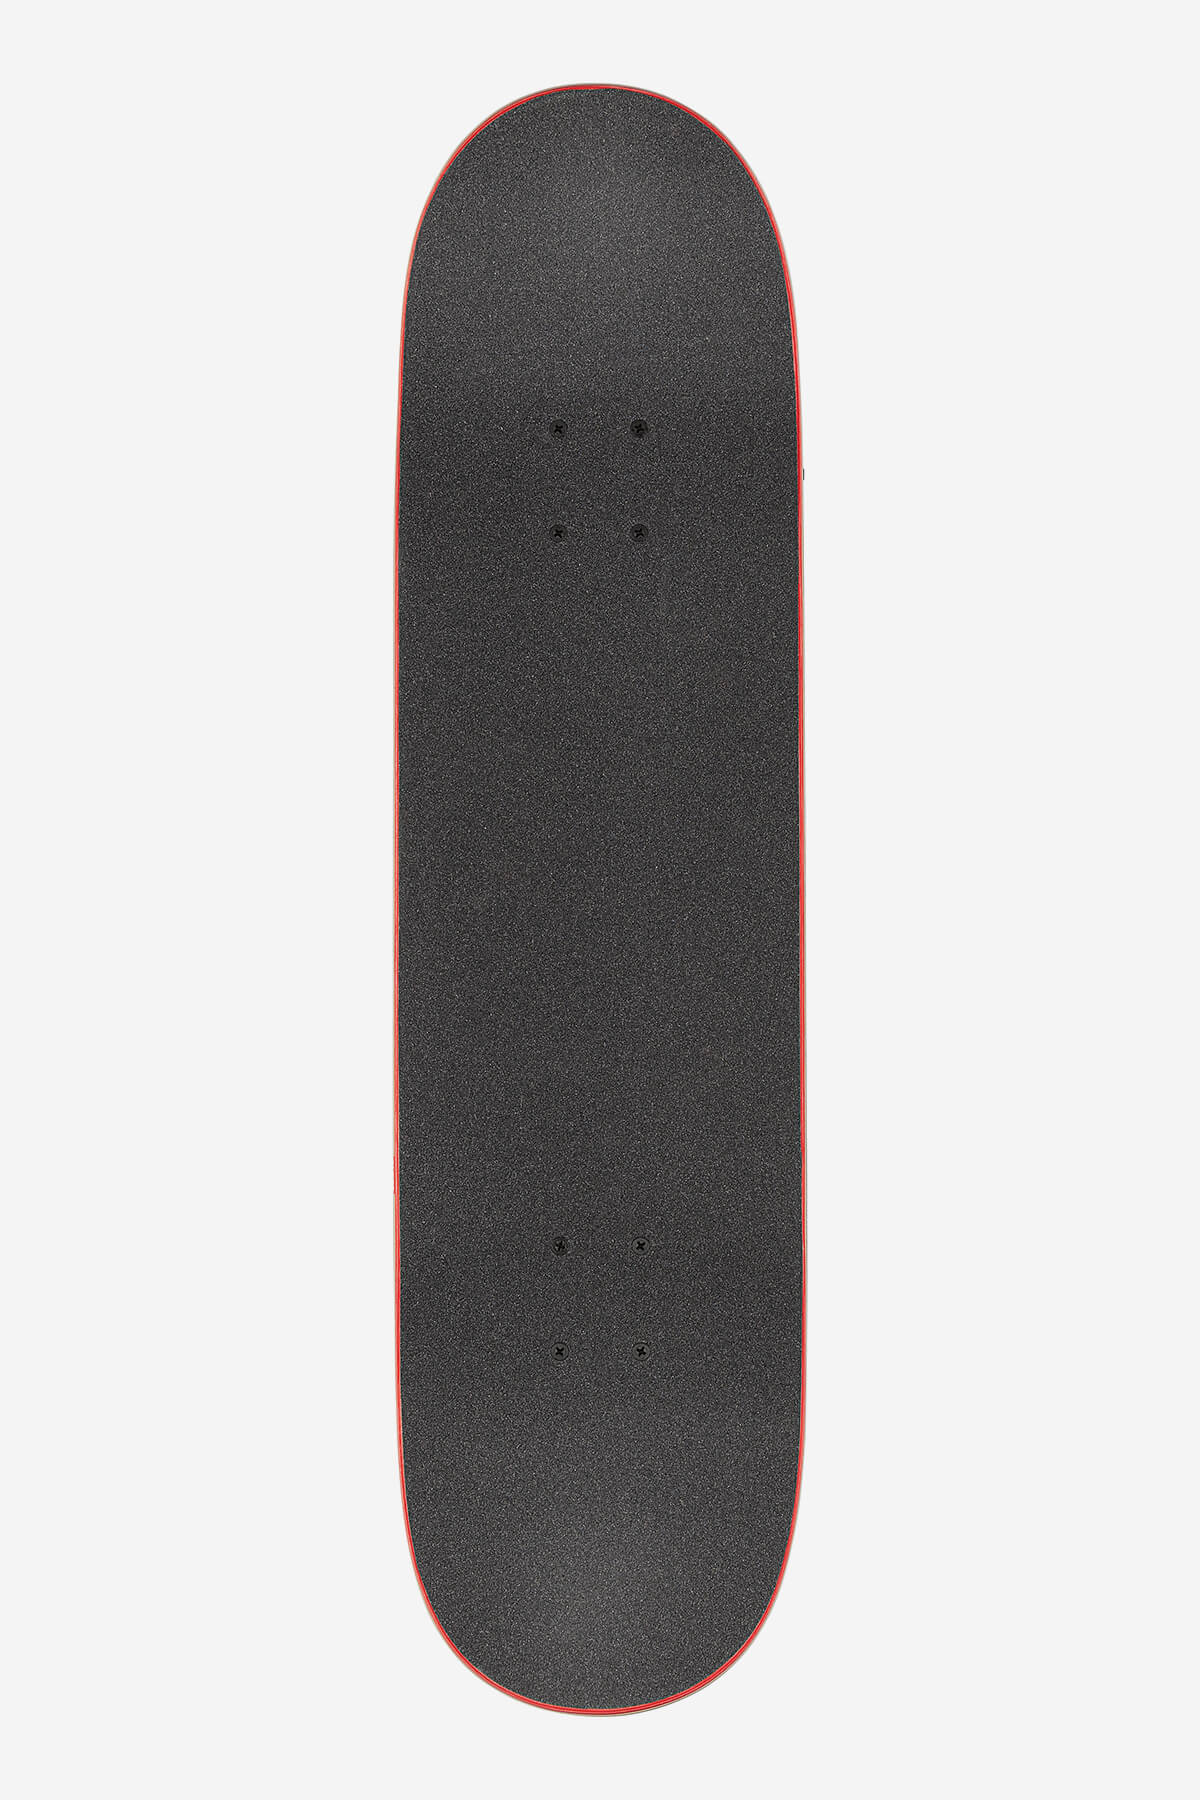 g1 stack daydream 8,25" completo skateboard